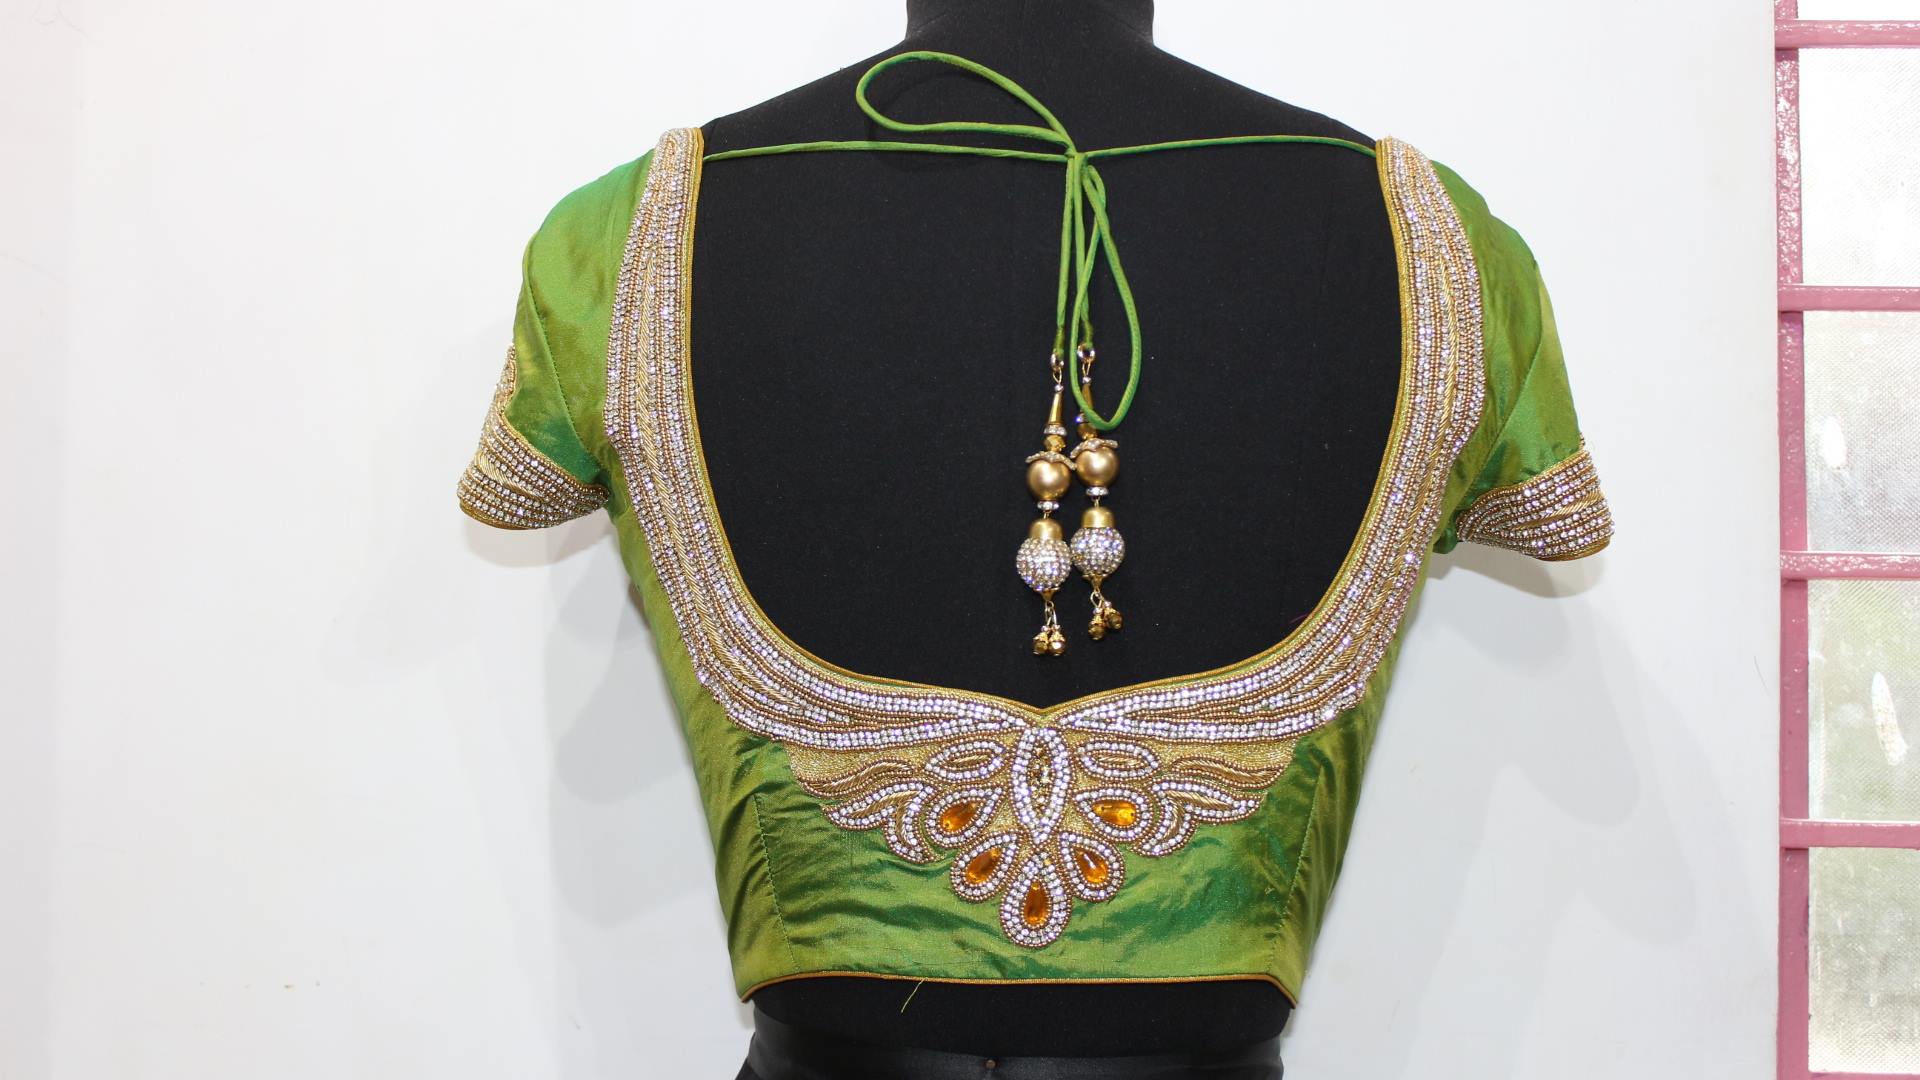  Rosado blouse designs-img3